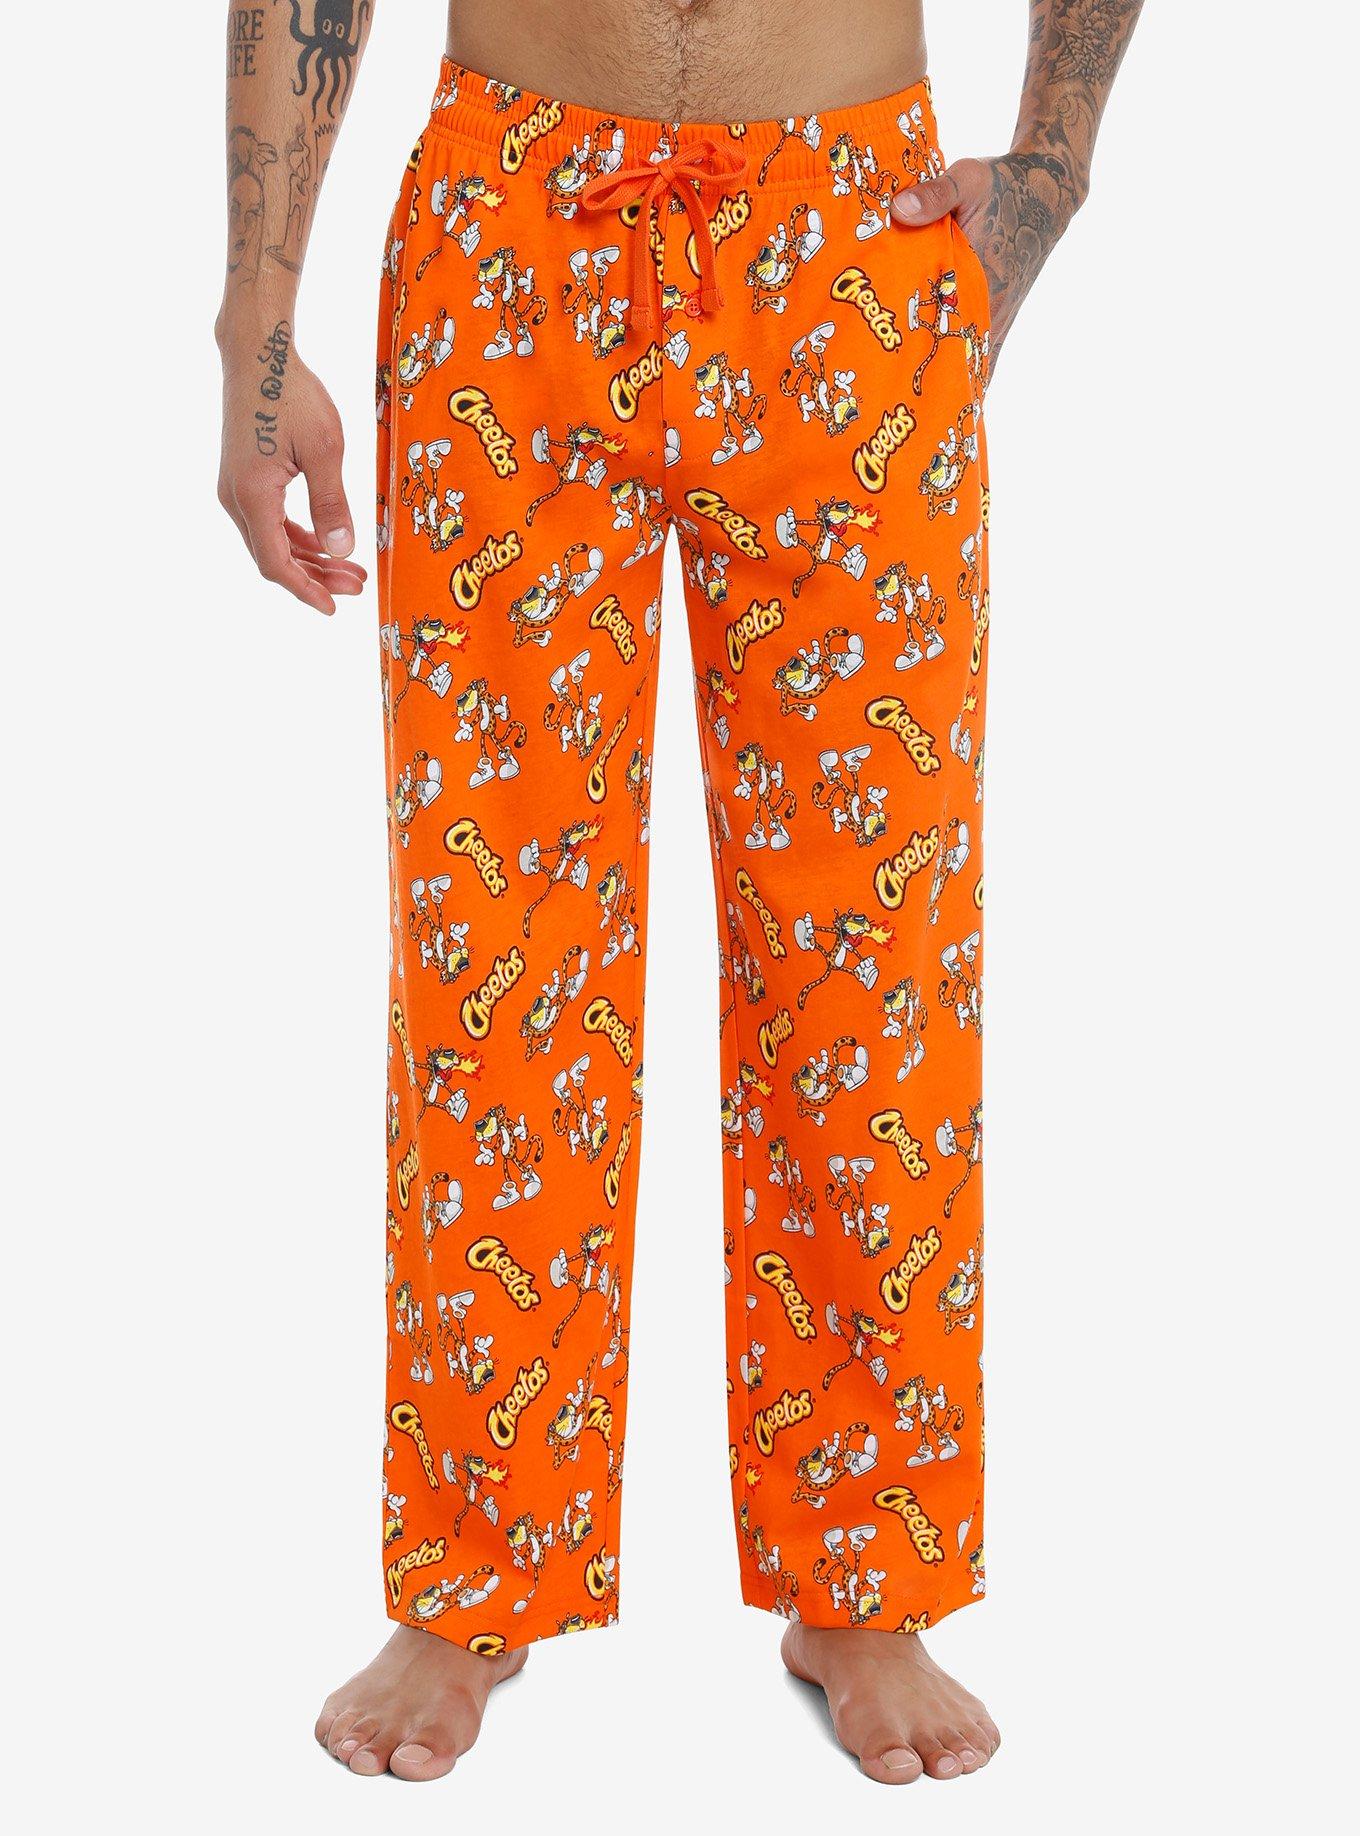 Chester Cheetos Men's and Big Men's Pajama Pants, Sizes S-2XL 